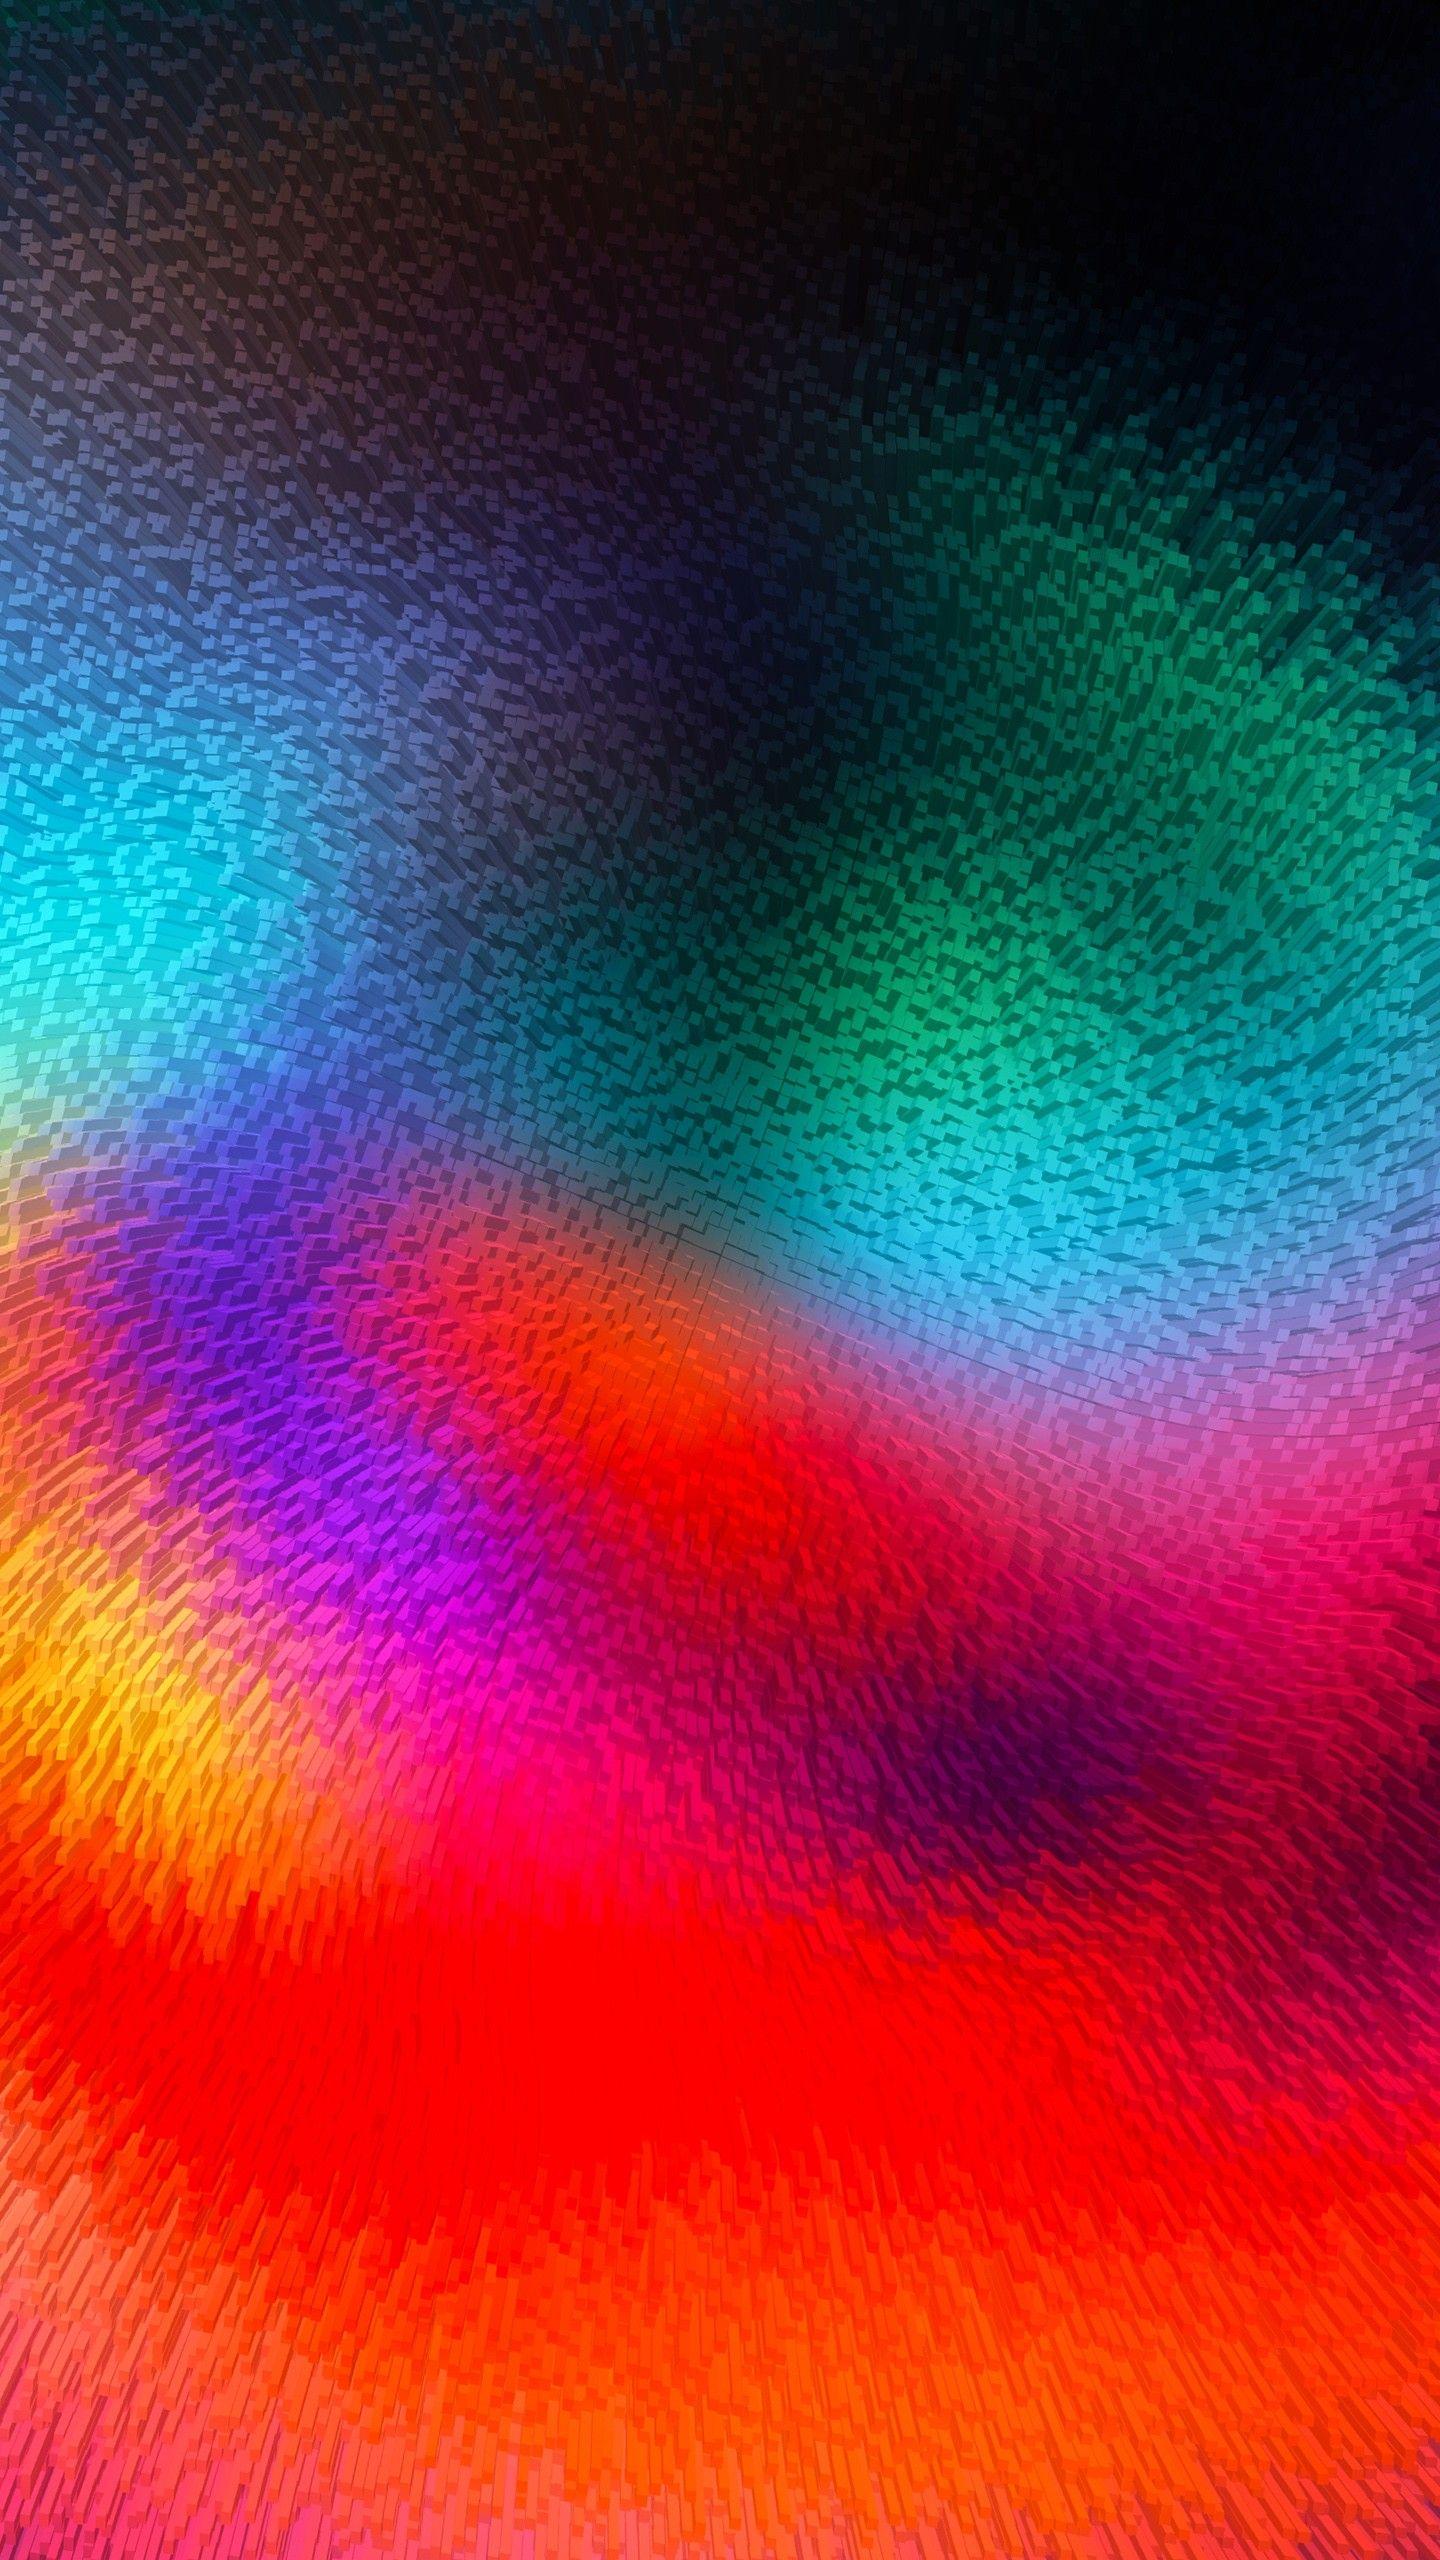 Abstract #Spiral Brainwaves 5K #wallpaper HD 4k background